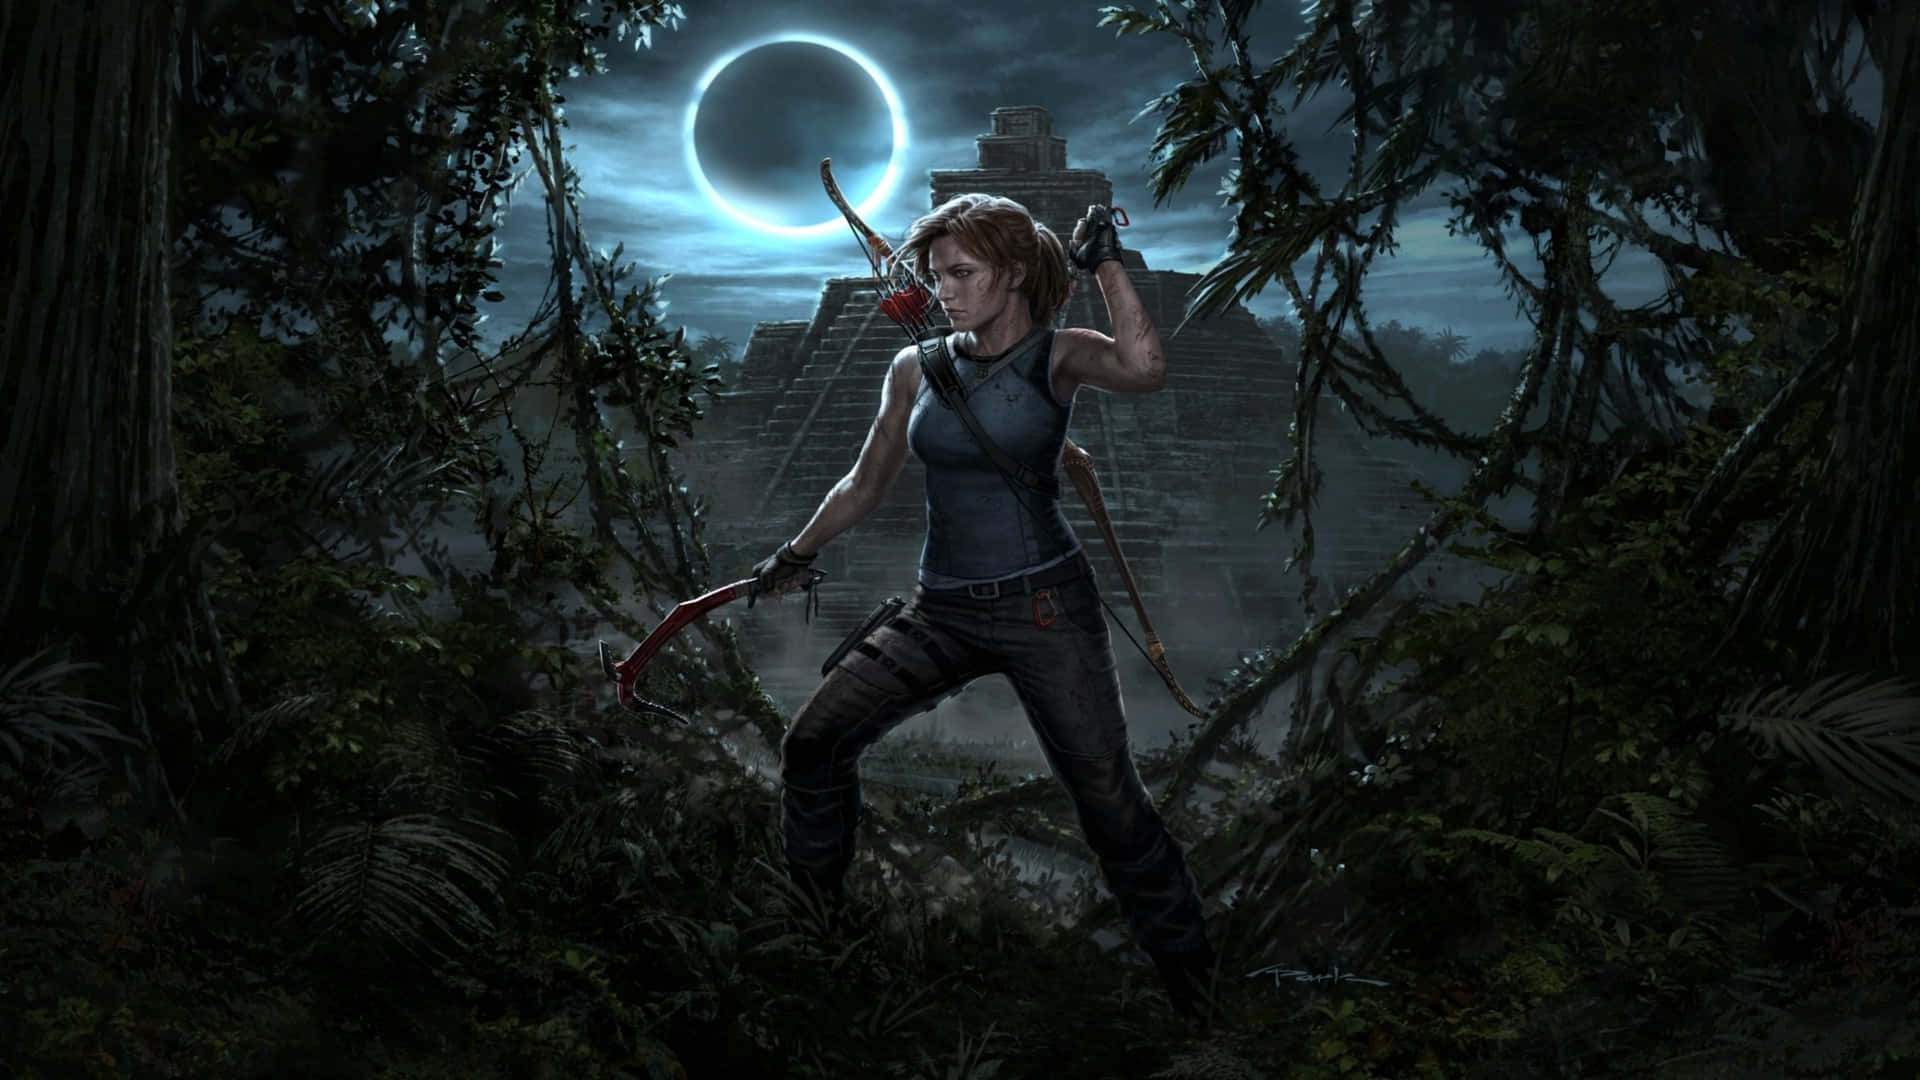 Immergitiin Un'avventura Emozionante Con Shadow Of The Tomb Raider